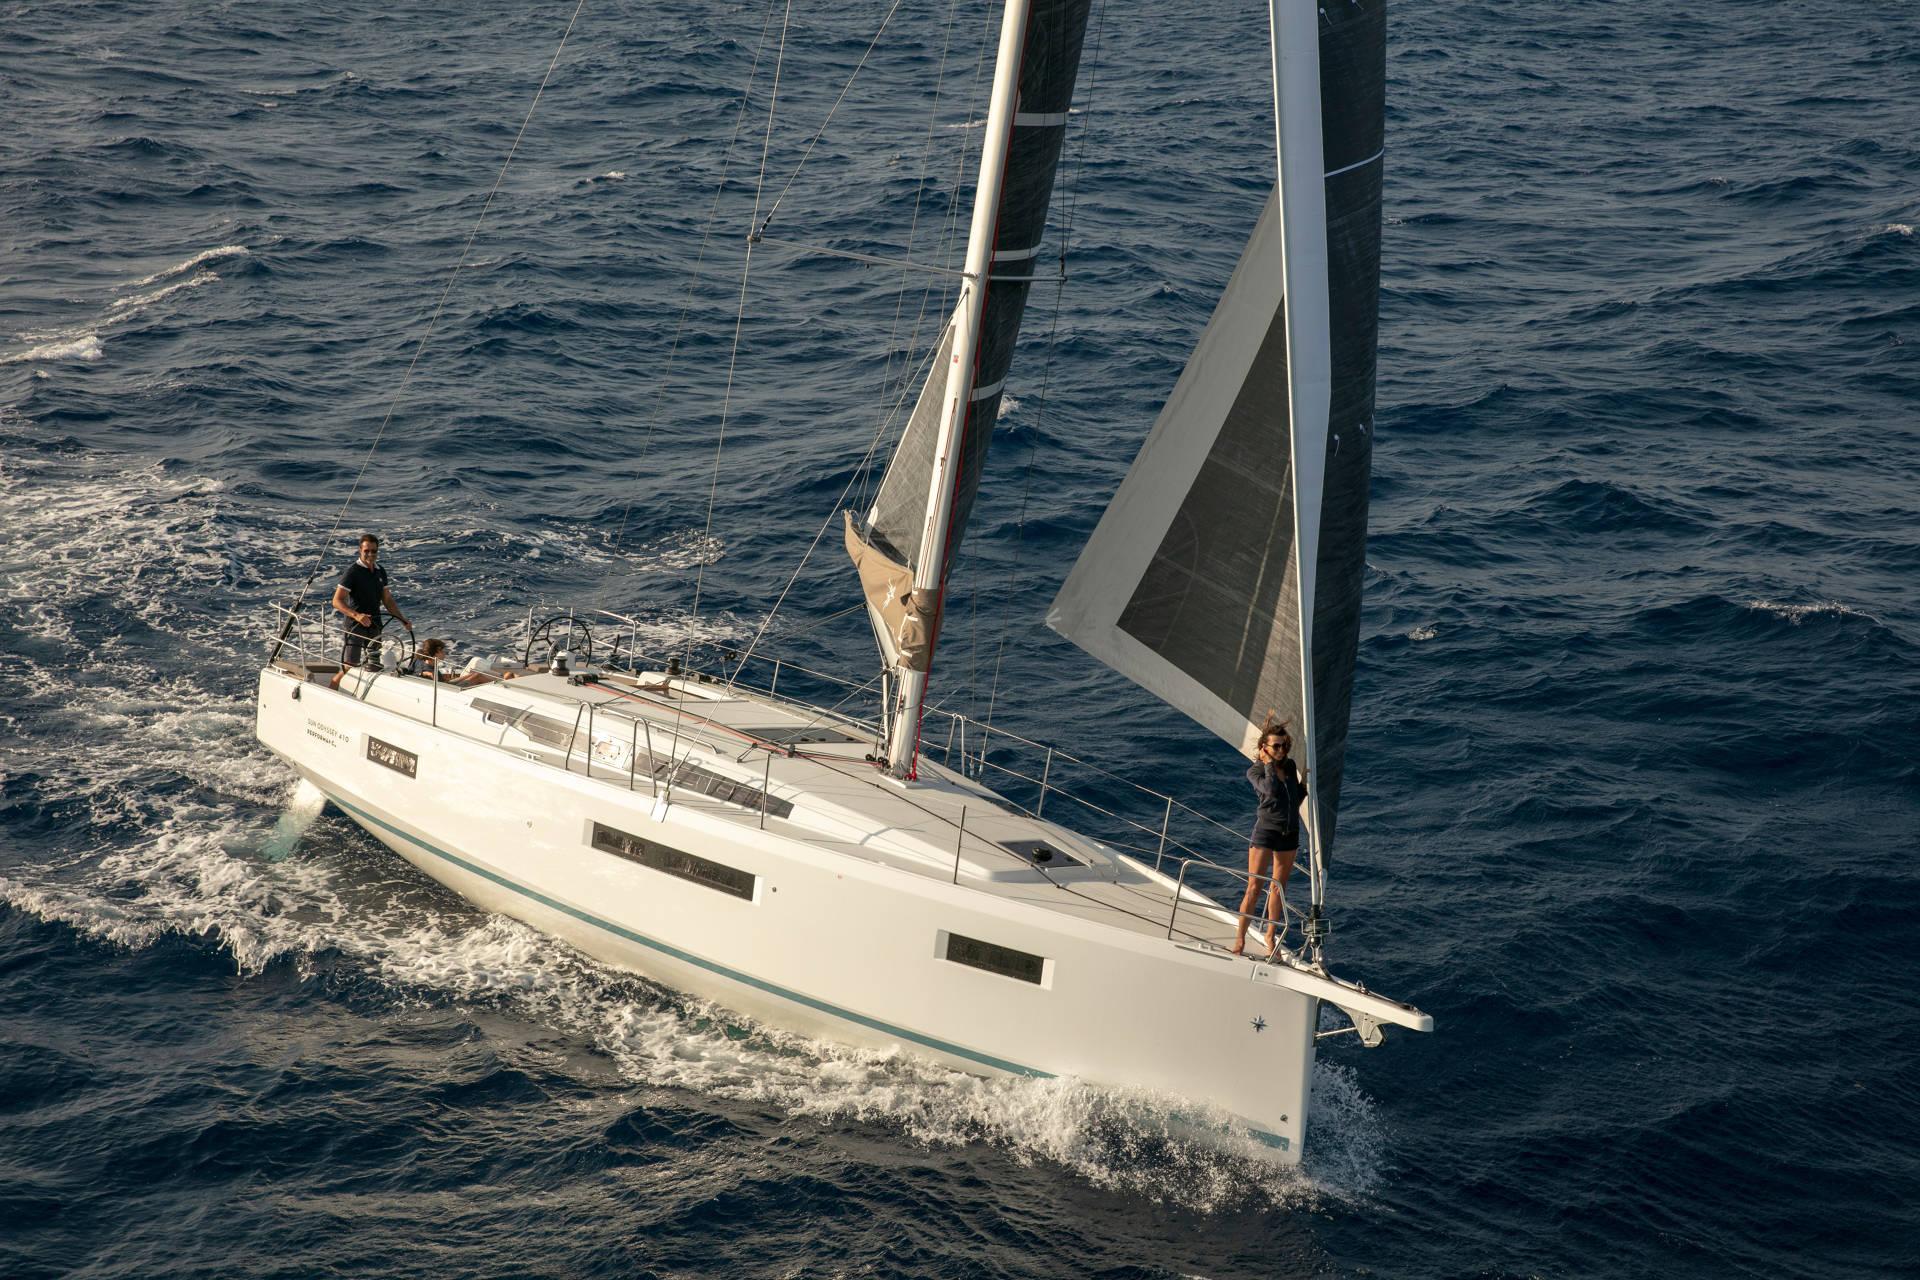 Sail boat FOR CHARTER, year 2021 brand Jeanneau and model Sun Odyssey 410, available in Port  Marina Palamós Palamós Girona España